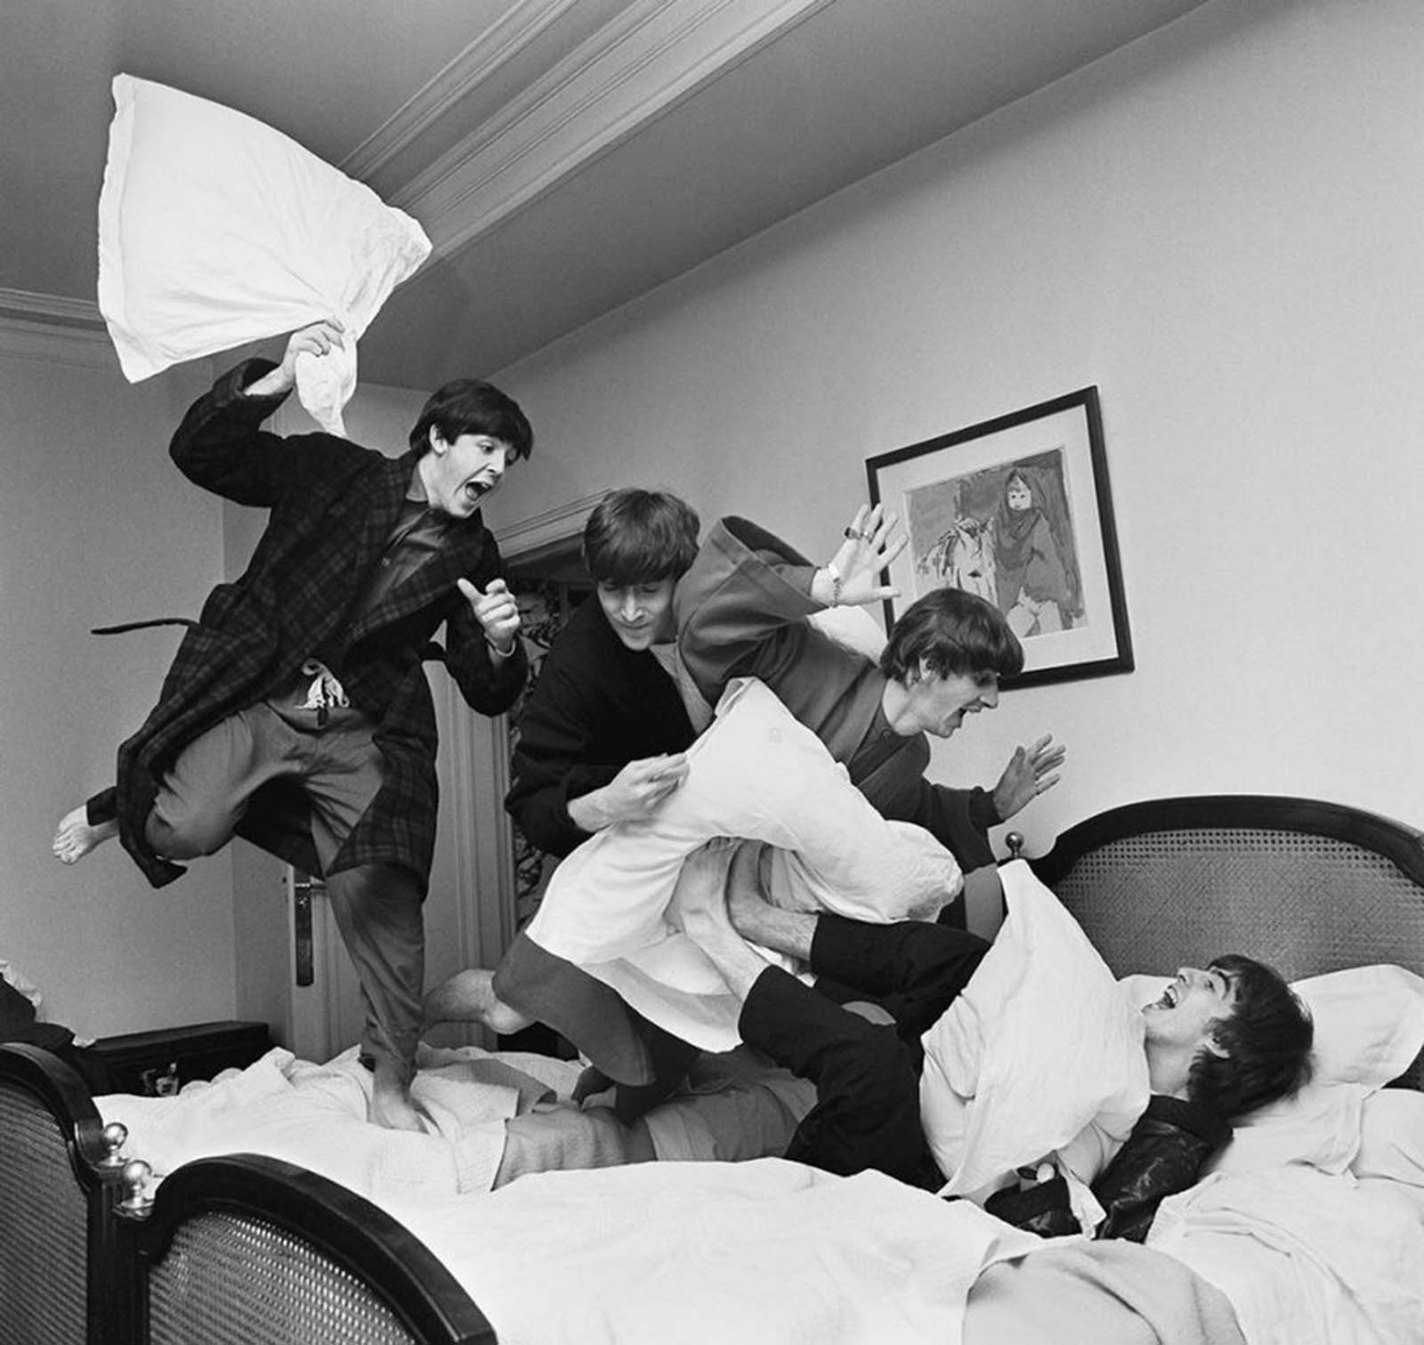 The Pillow Fight, Harry Benson, 1964